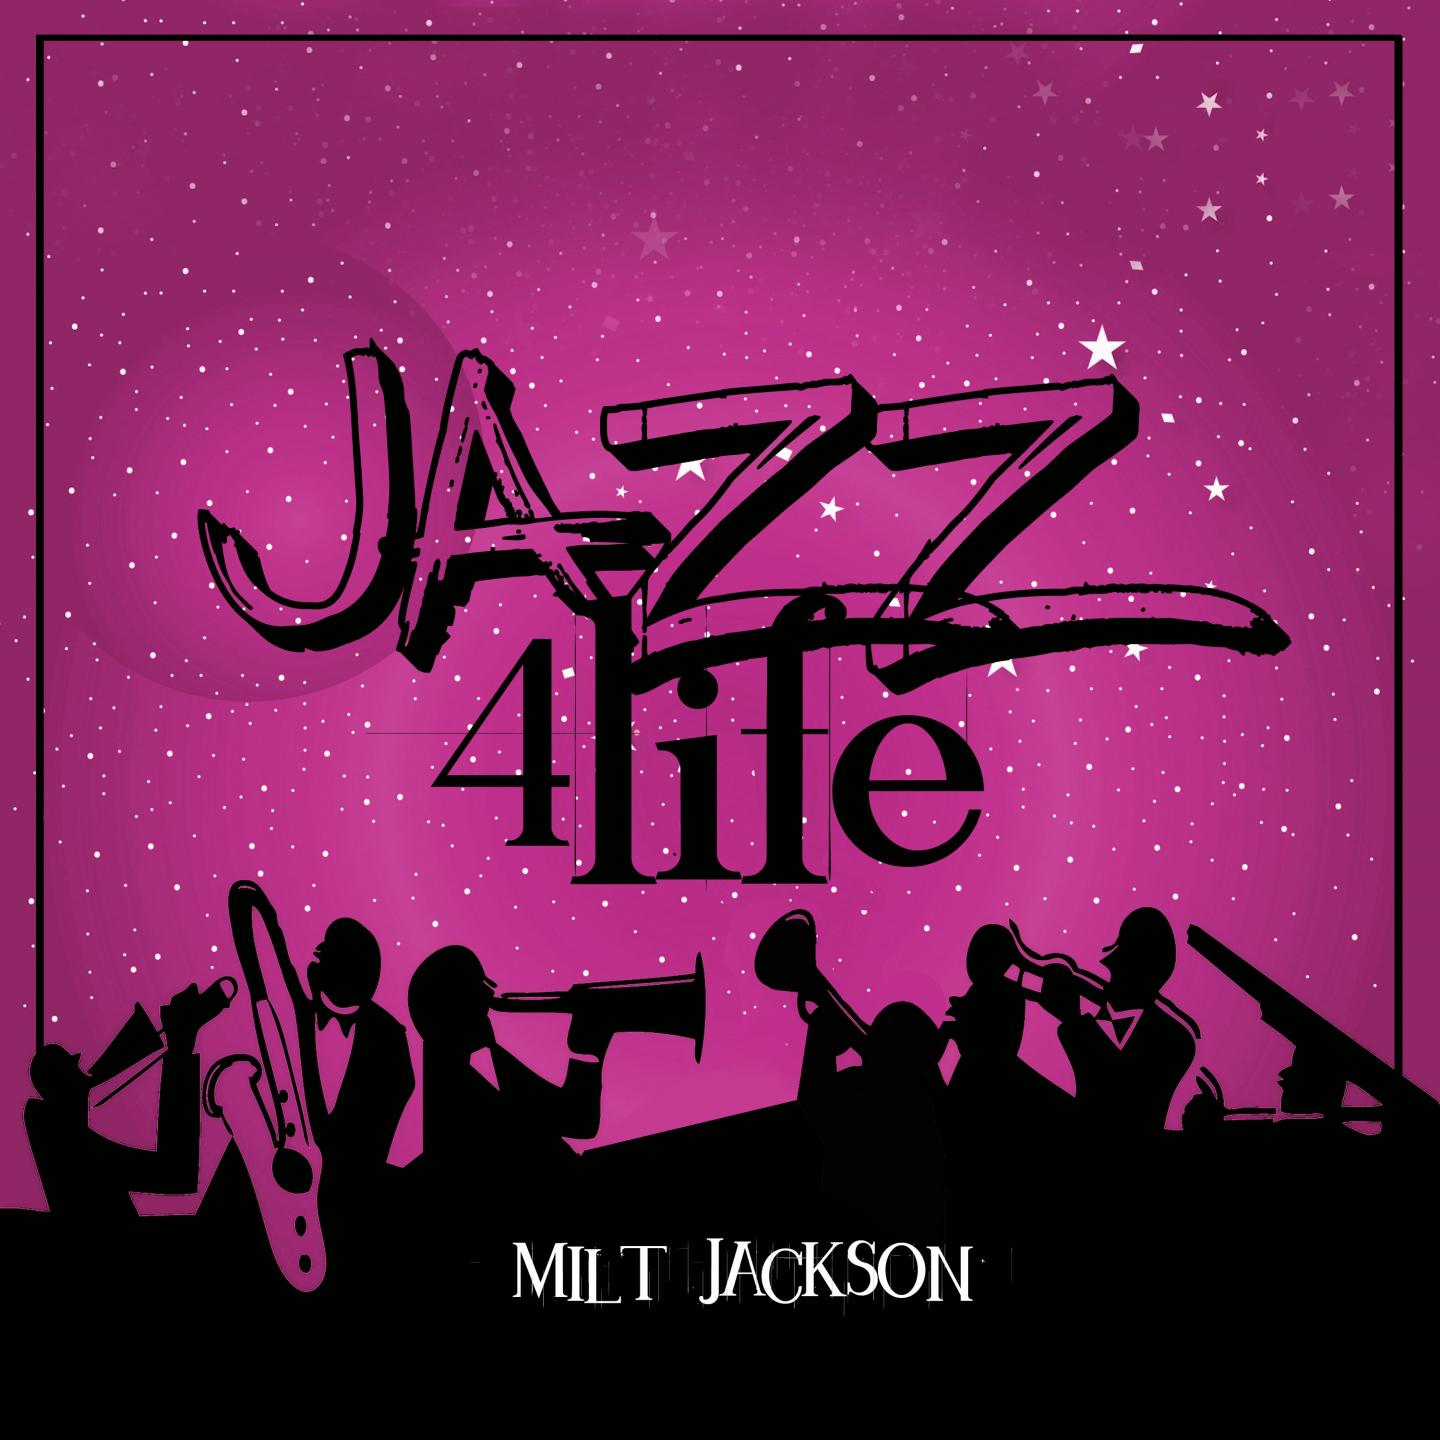 Jazz 4 Life